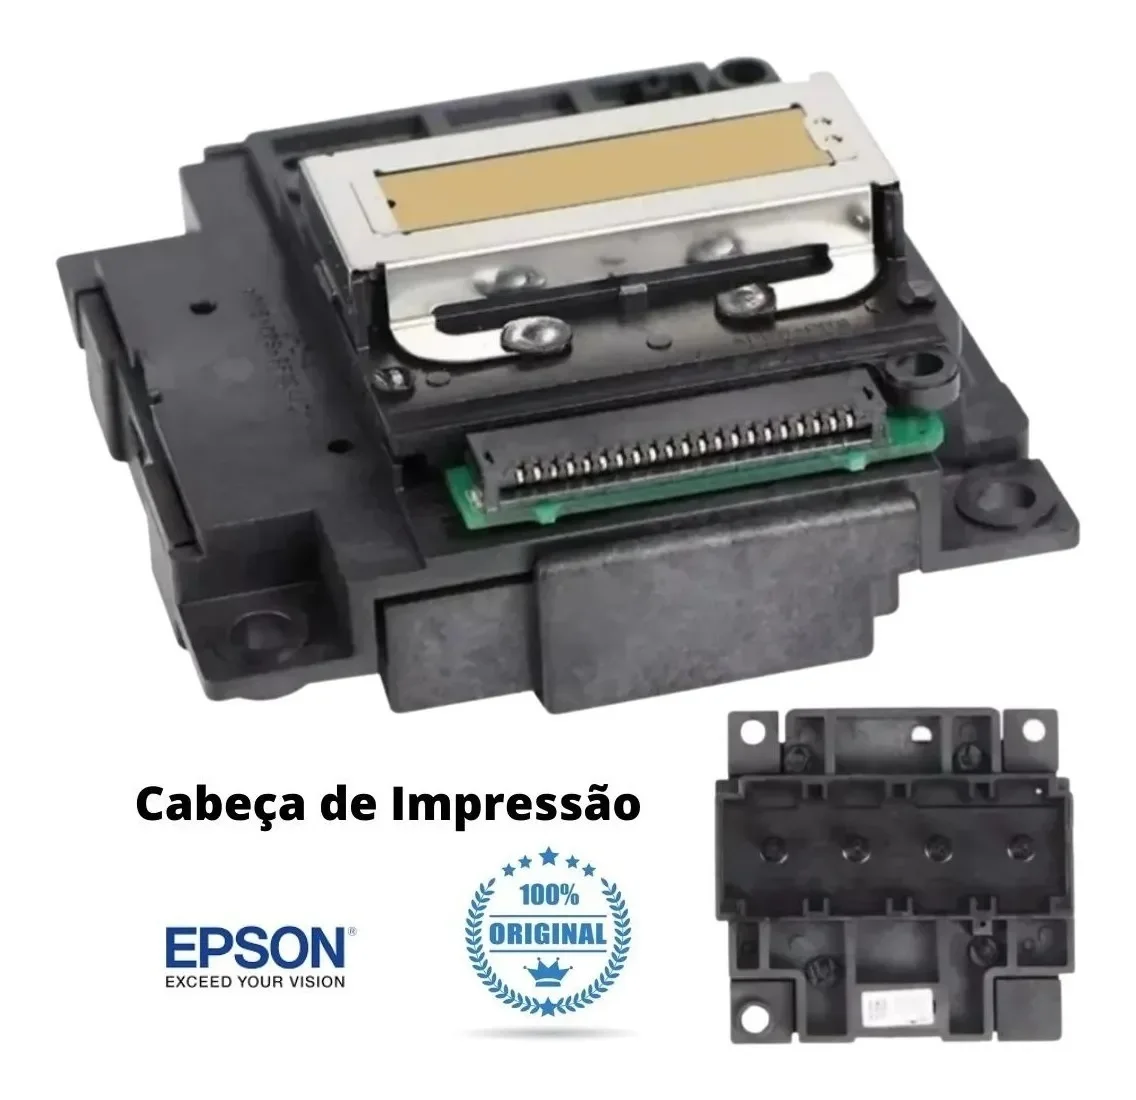 

Cabeça De Impressão printhead Epson L4160 L550 L301 L555 L558 L300 L355 L365 L366 L455 L456 L565 L566 L375 L395 Fa04010 Fa04000